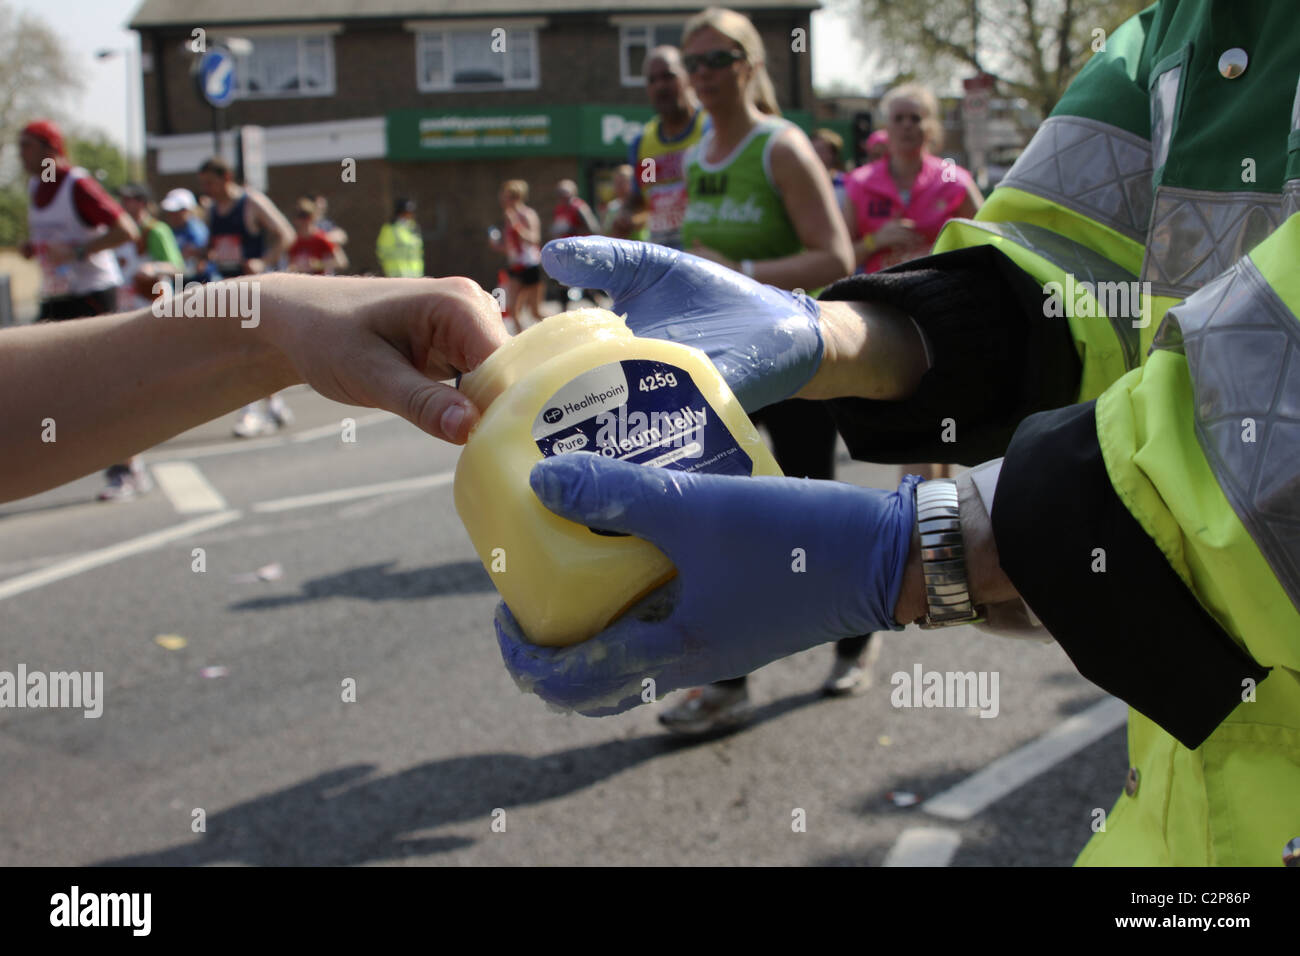 Runner accepts petroleum jelly from "St John's Ambulance" volunteer on route of London Marathon Stock Photo